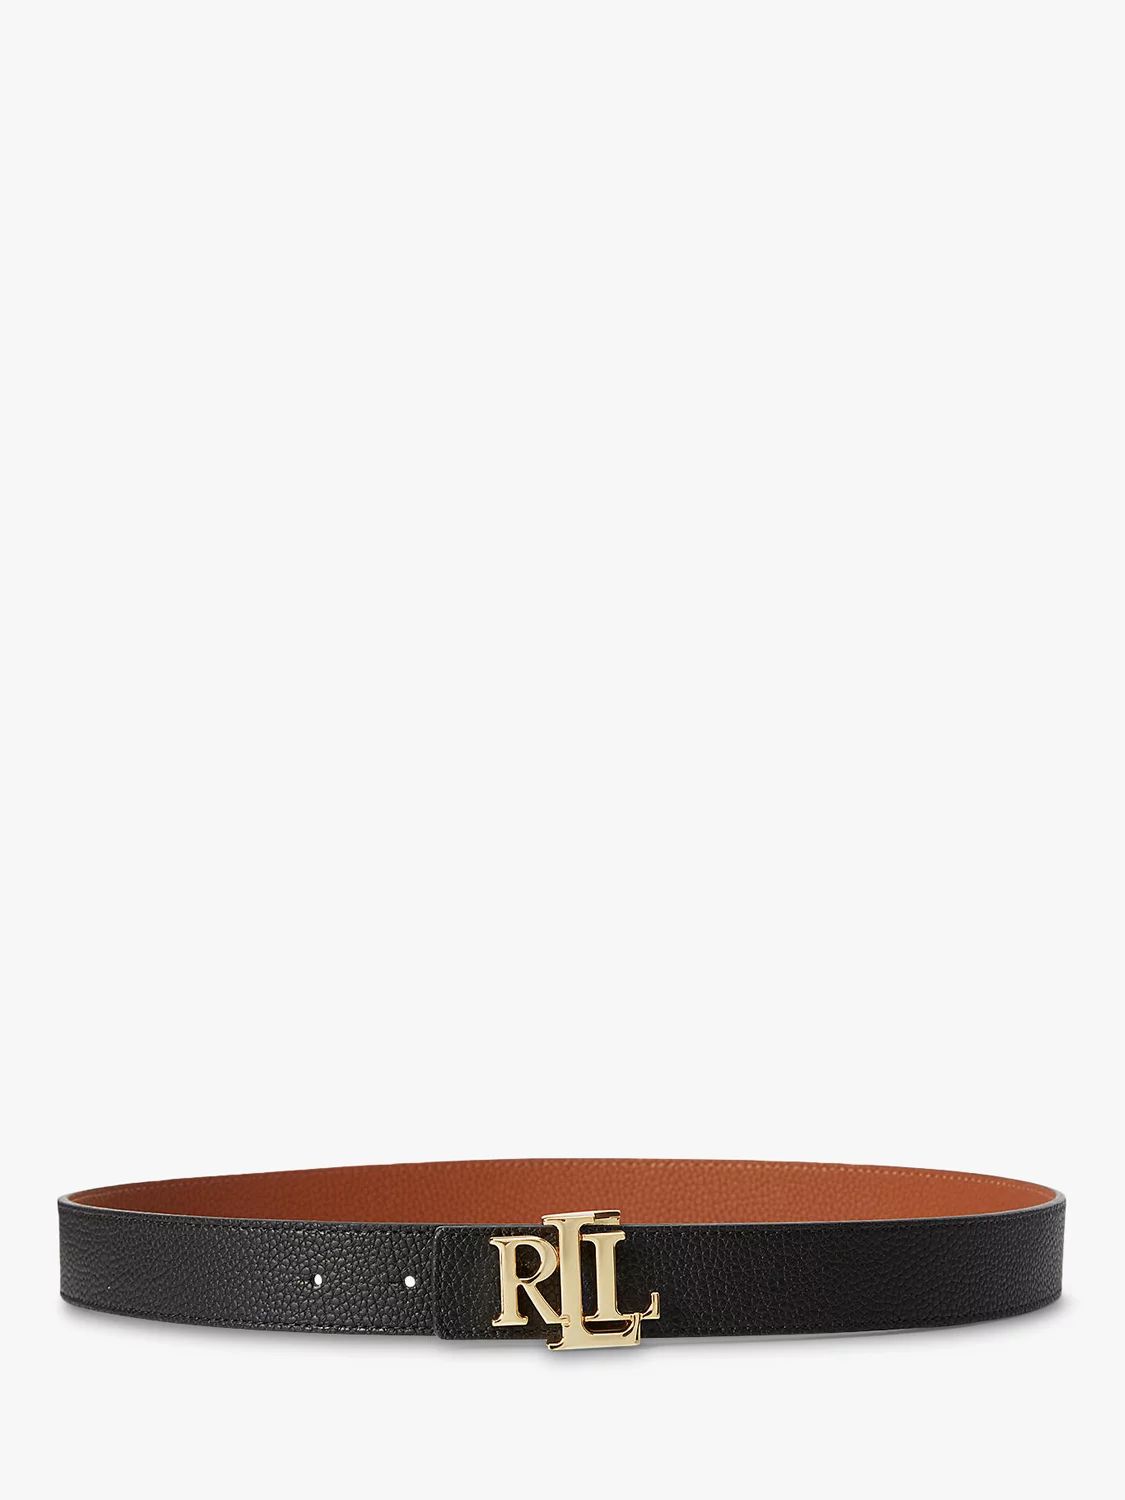 Ralph Lauren Casual Leather Dress Belt, Black/Tan | John Lewis (UK)